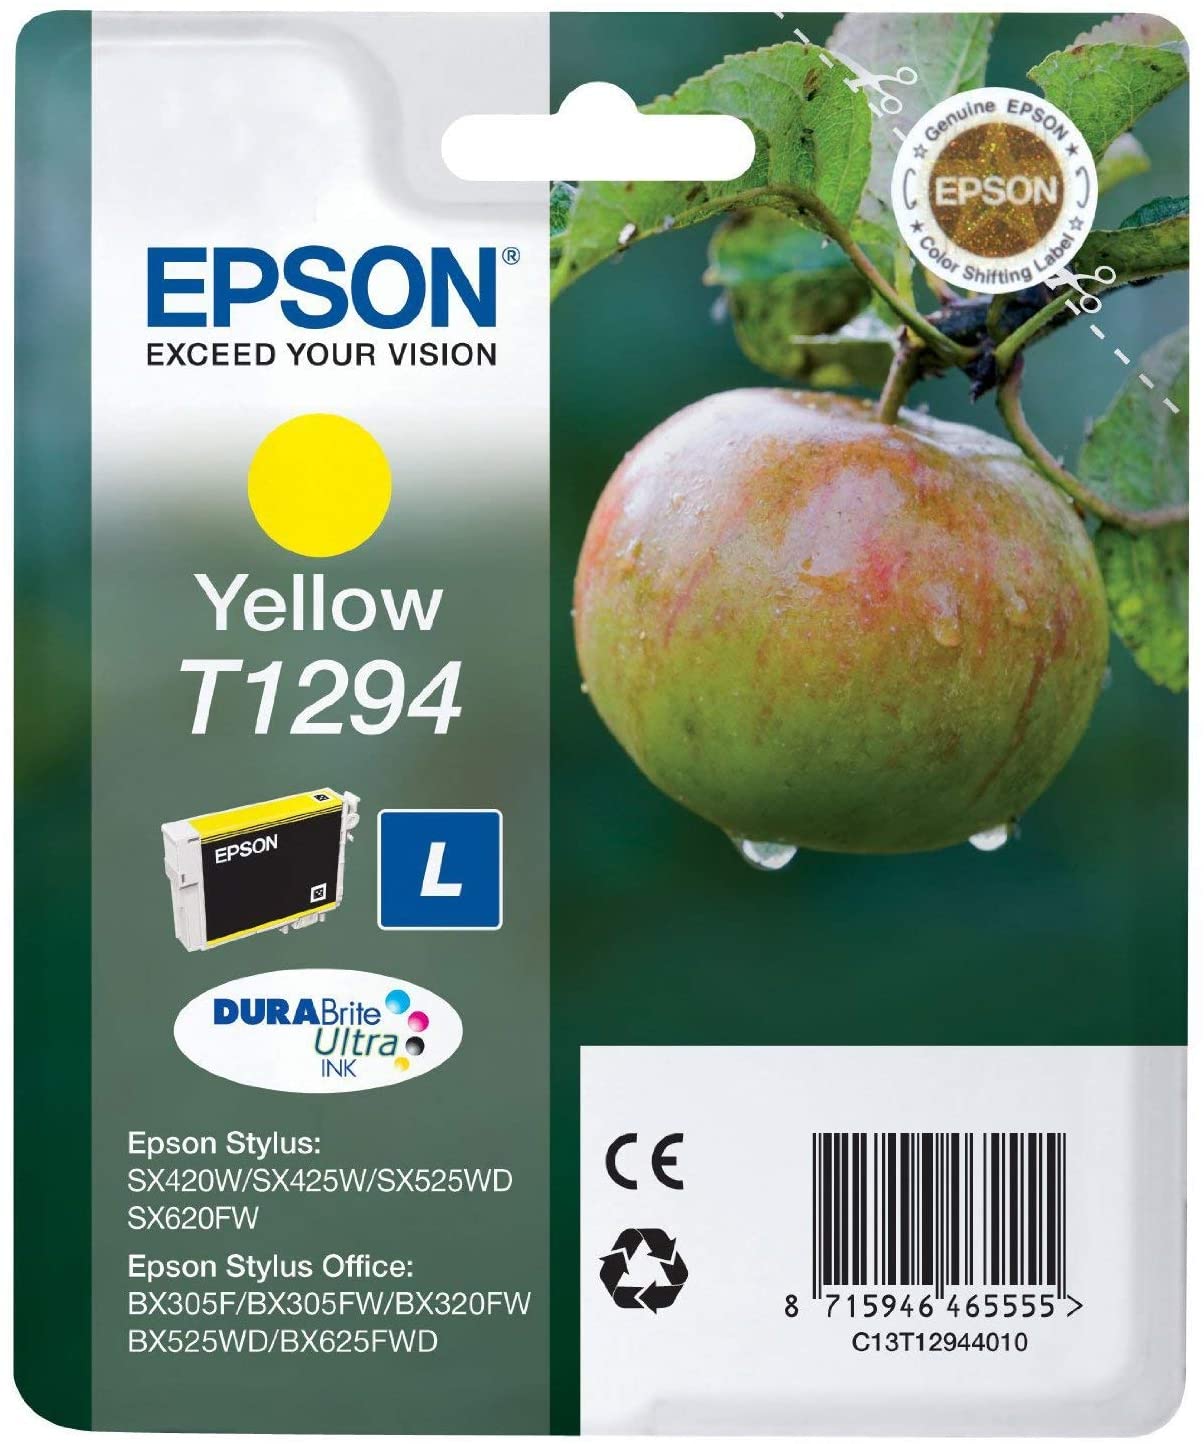 Epson Durabrite Ultra Ink Large Cartridge, Yellow [t1294]